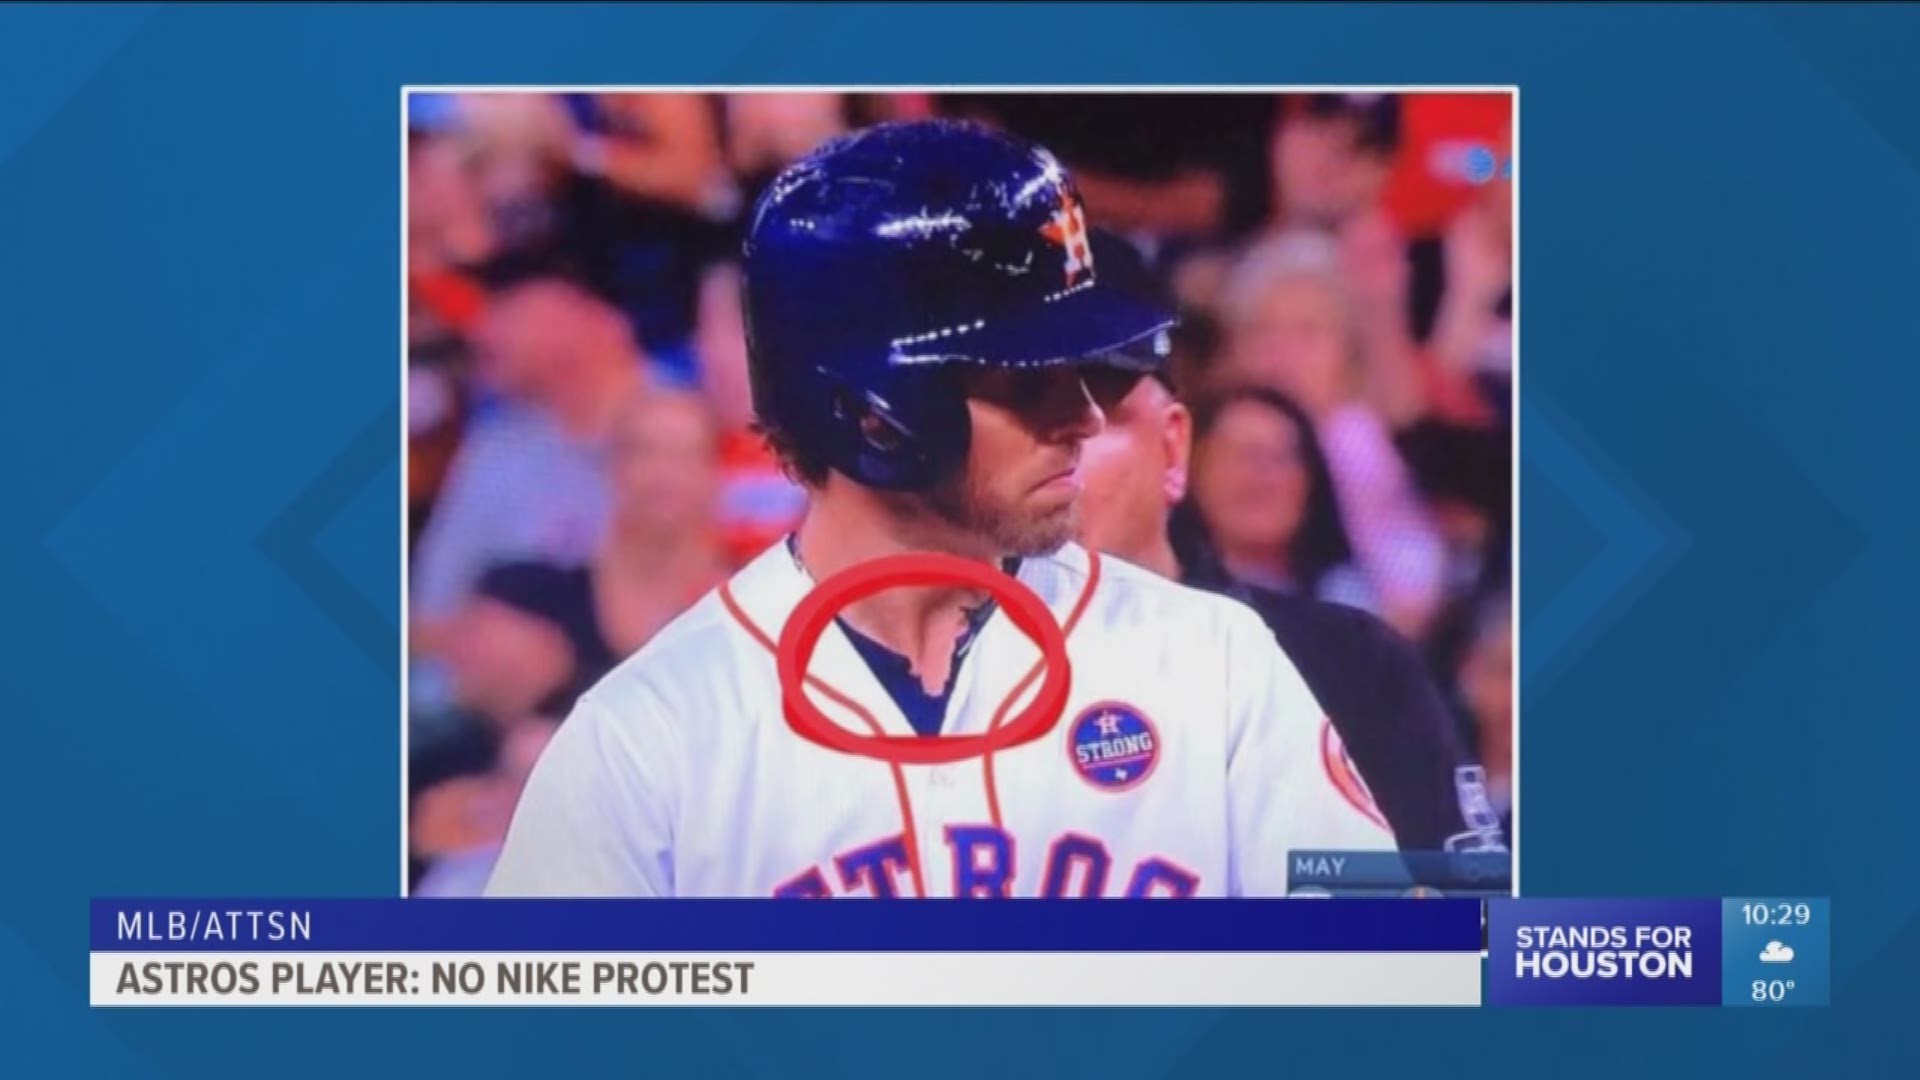 Astros player: No Nike protest